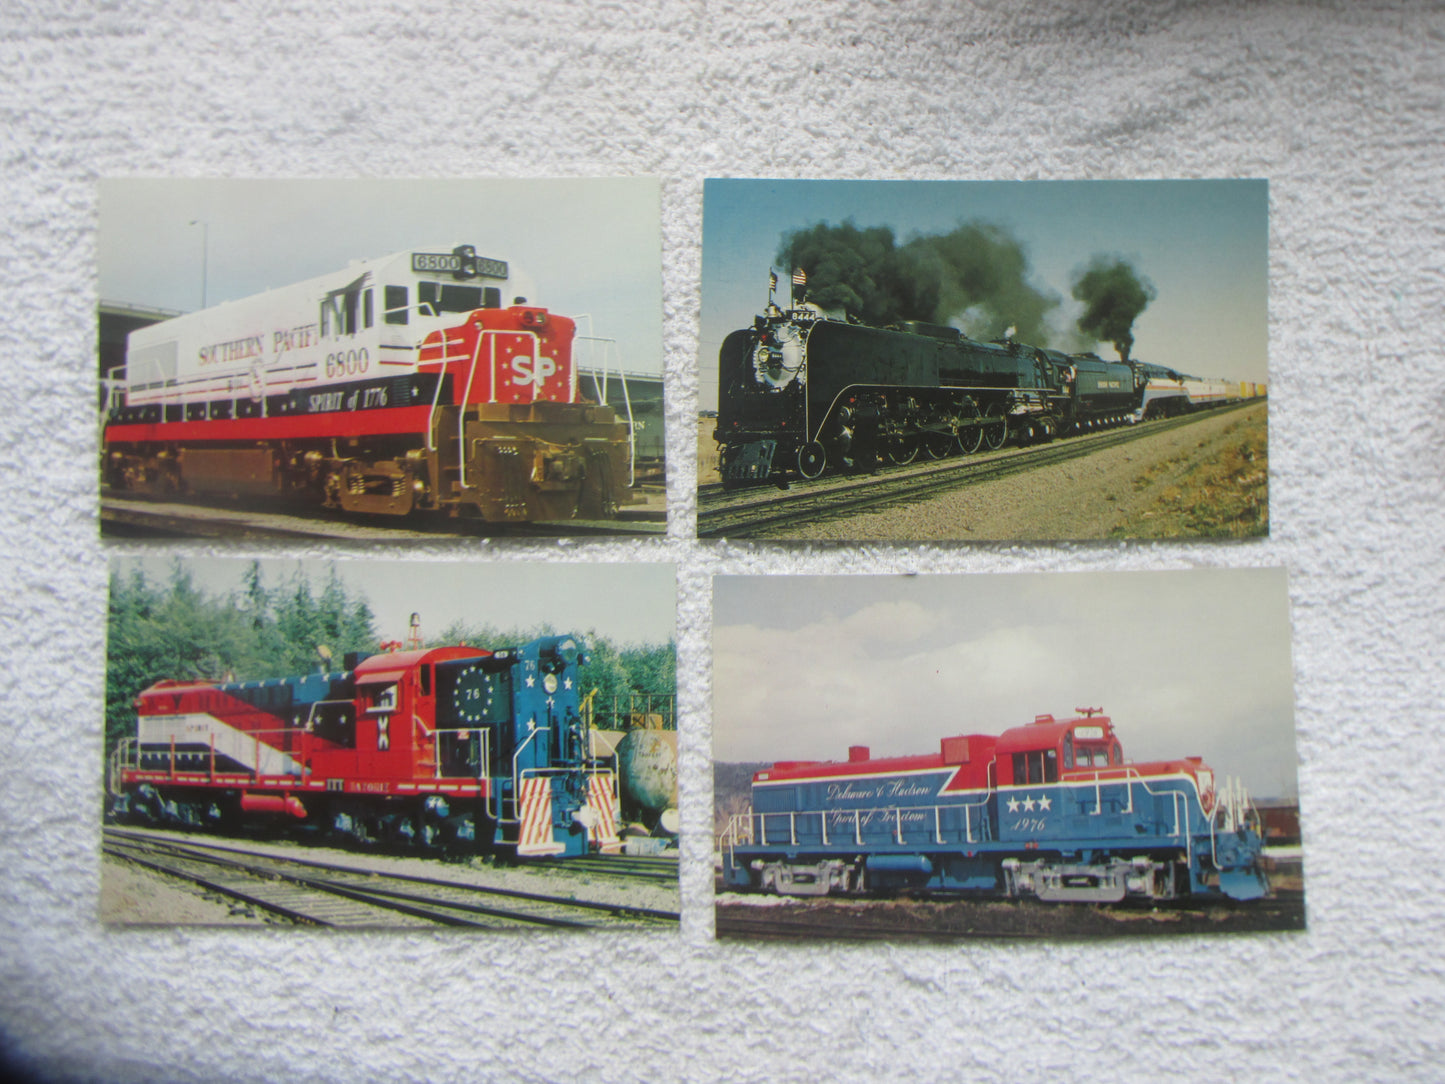 Bicentennial Engine Post Cards #1